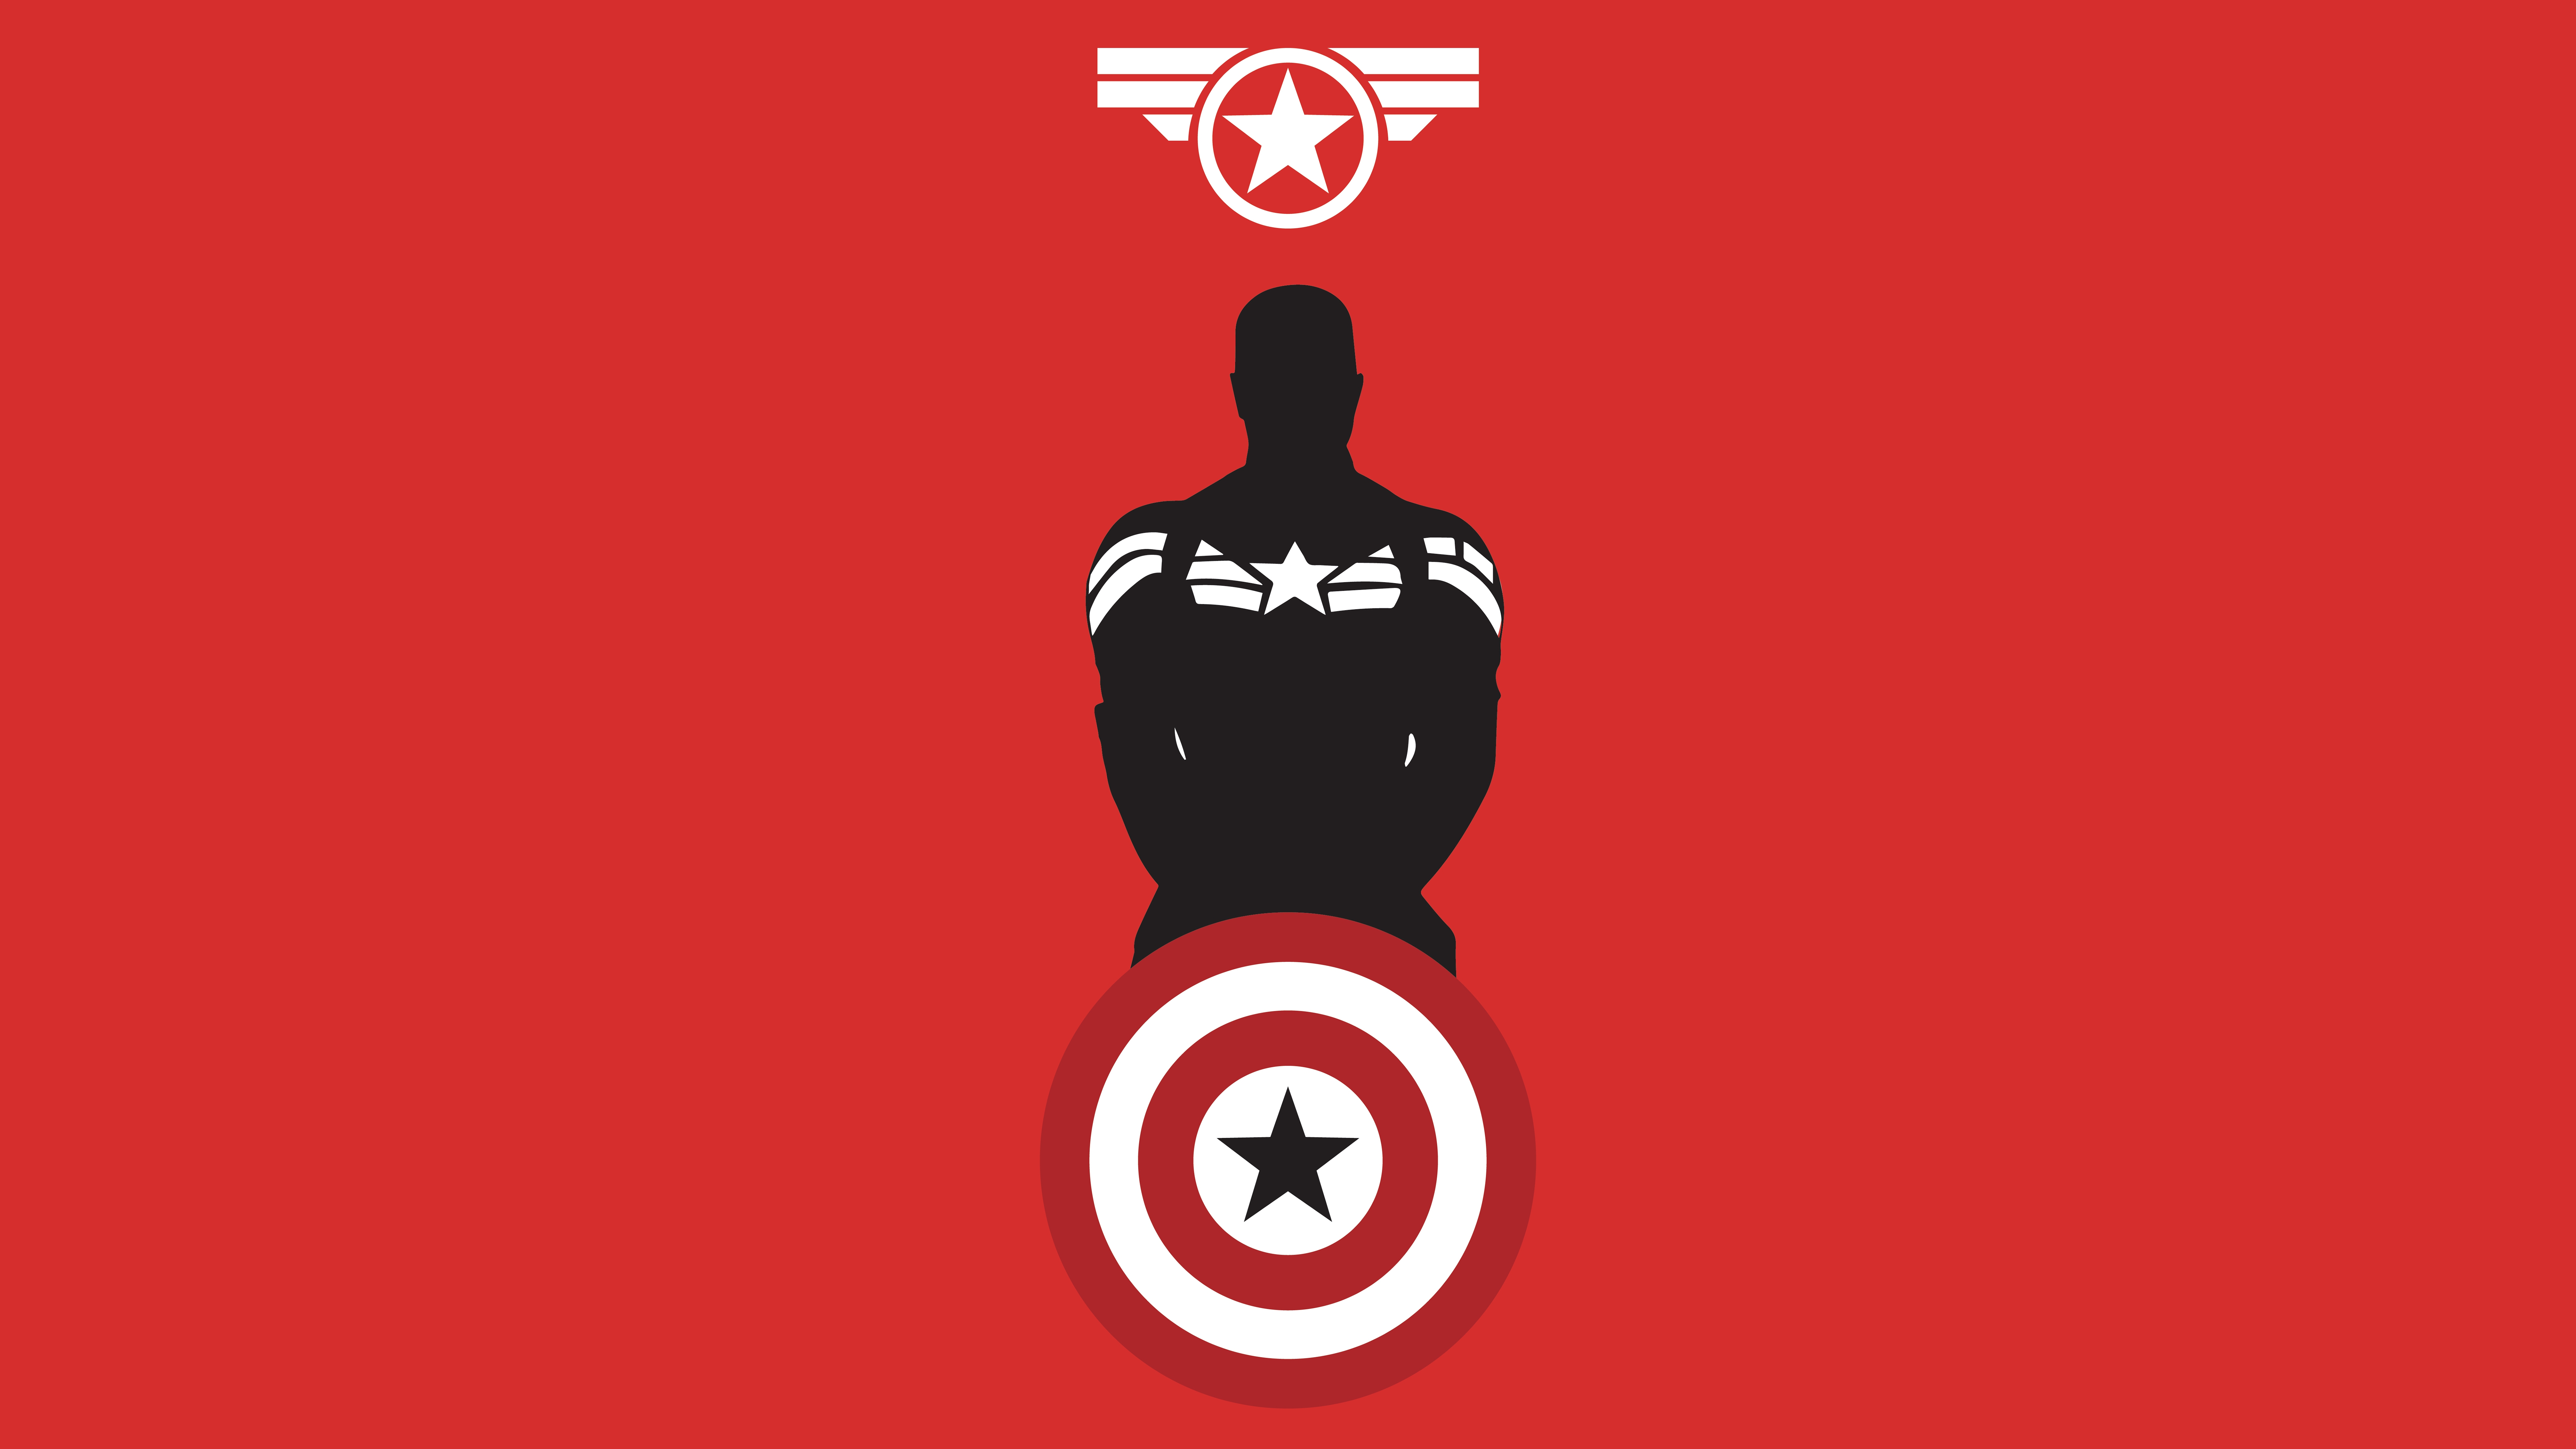 HD wallpaper, Captain America, Simple, Minimal Art, 8K, Marvel Superheroes, 5K, Red Background